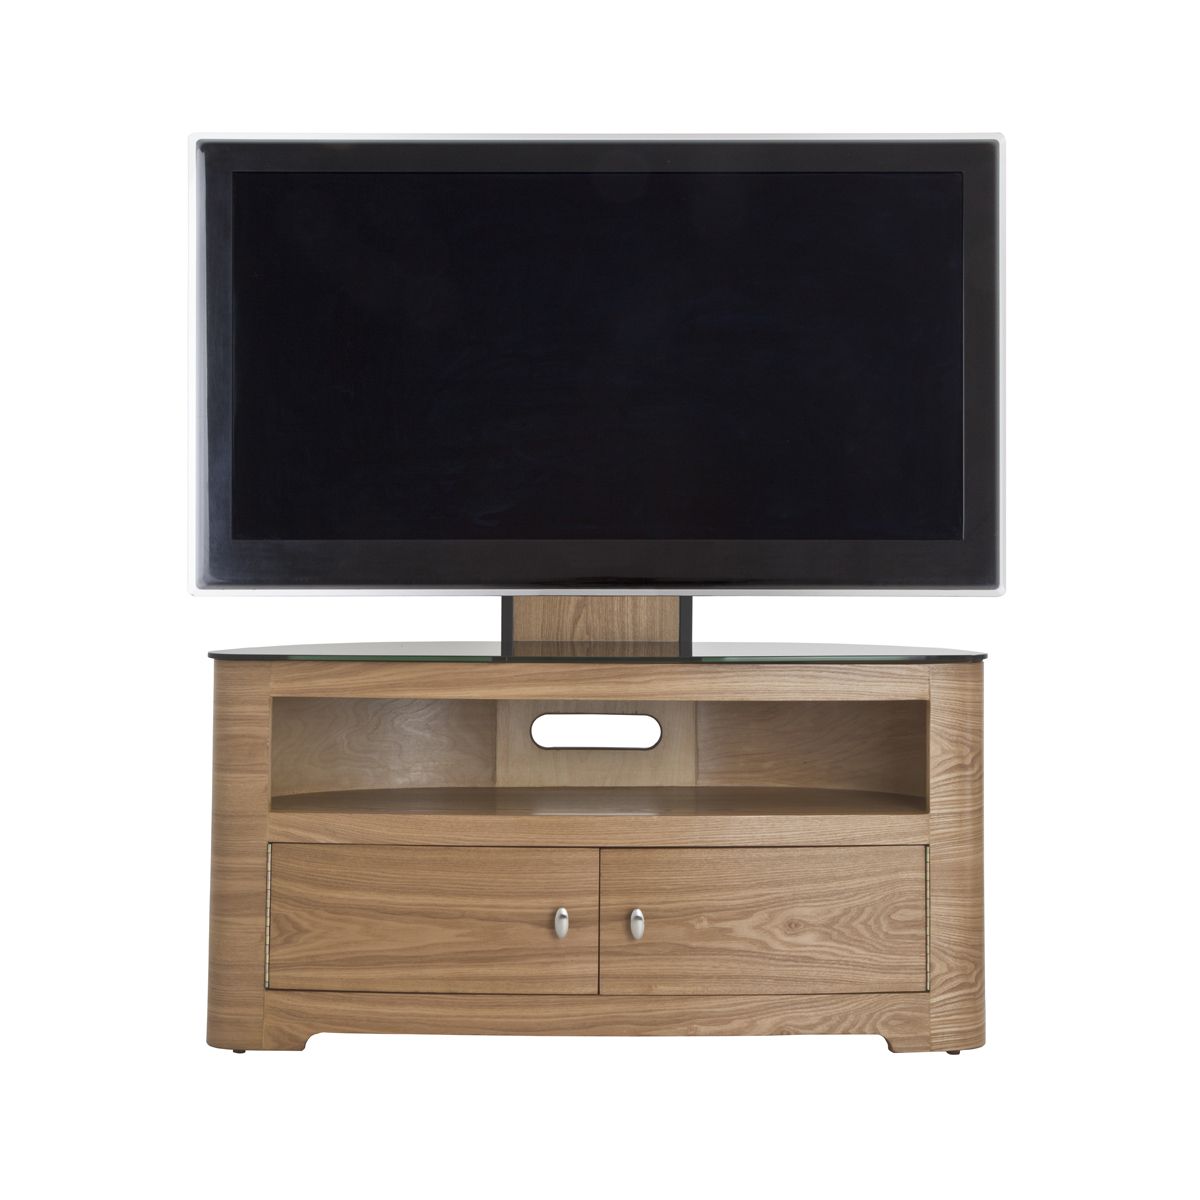 Large Oak Veneer Oval Lcd Plasma Tv Stand Cabinet 42+ Inch Regarding Plasma Tv Holders (View 8 of 15)